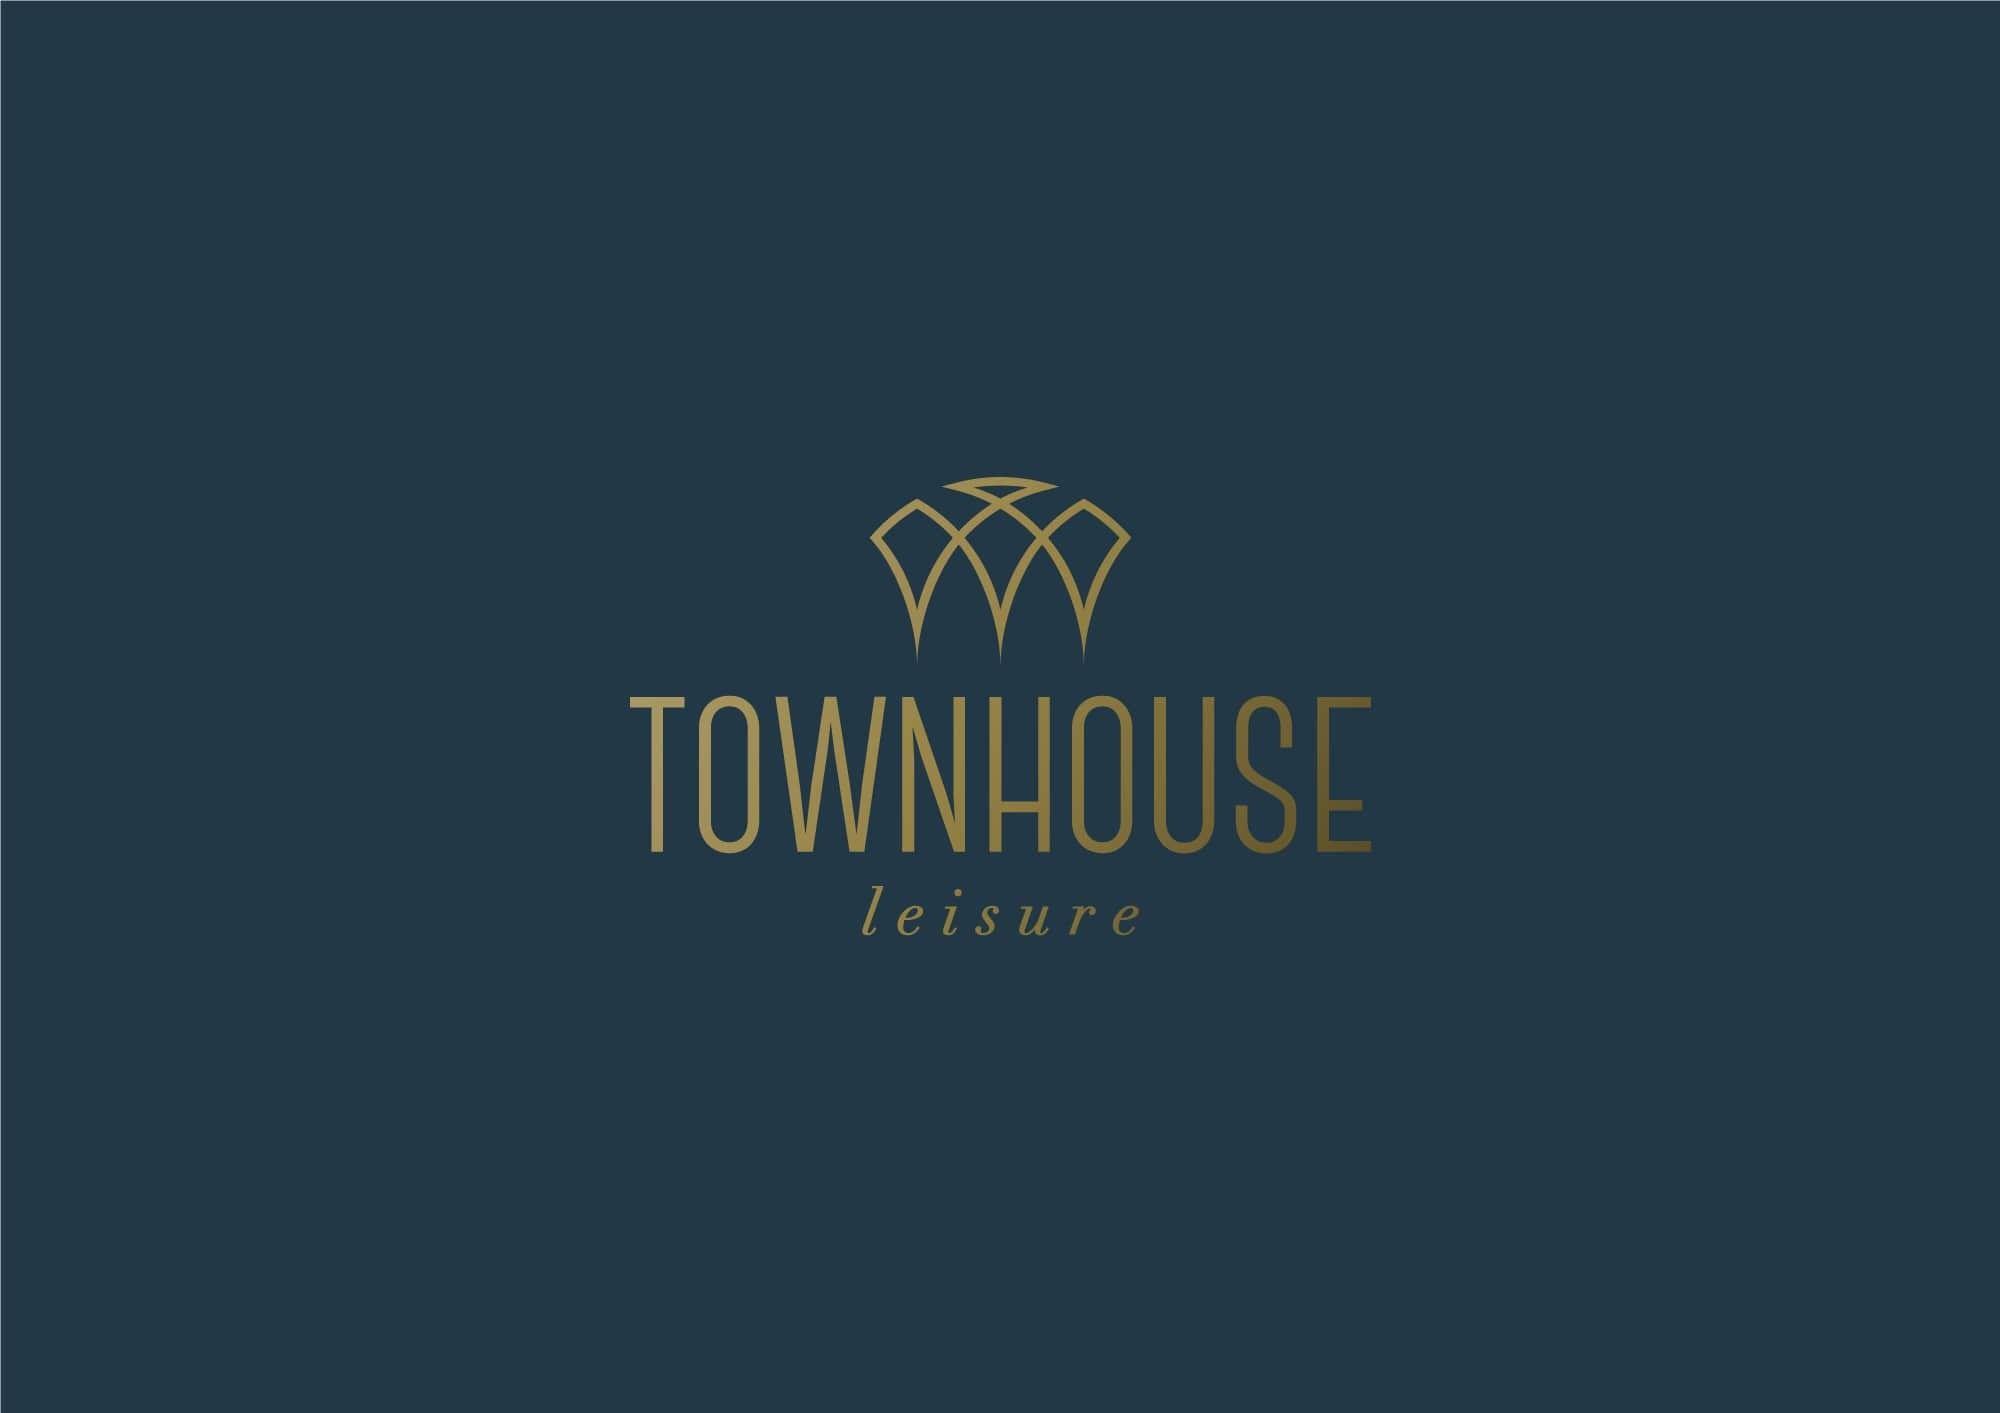 Townhouse Logo - Townhouse Leisure | LinkedIn